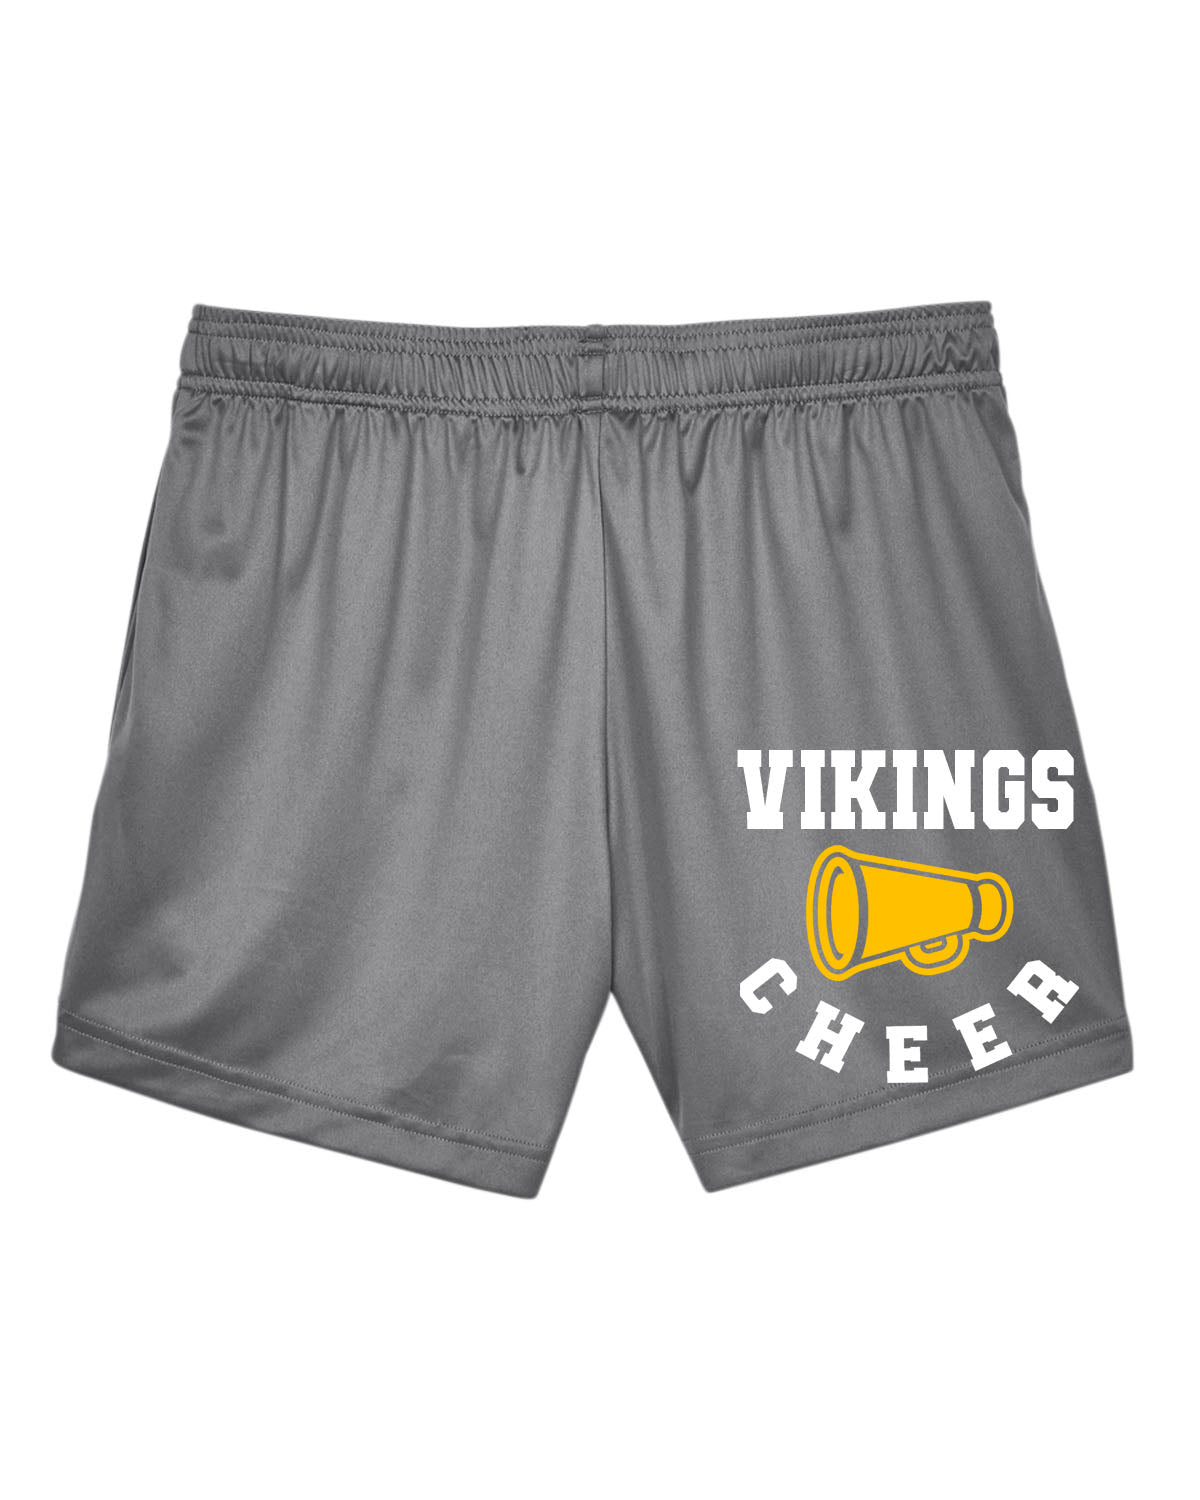 Vernon Vikings Cheer Ladies Performance Design 13 Shorts